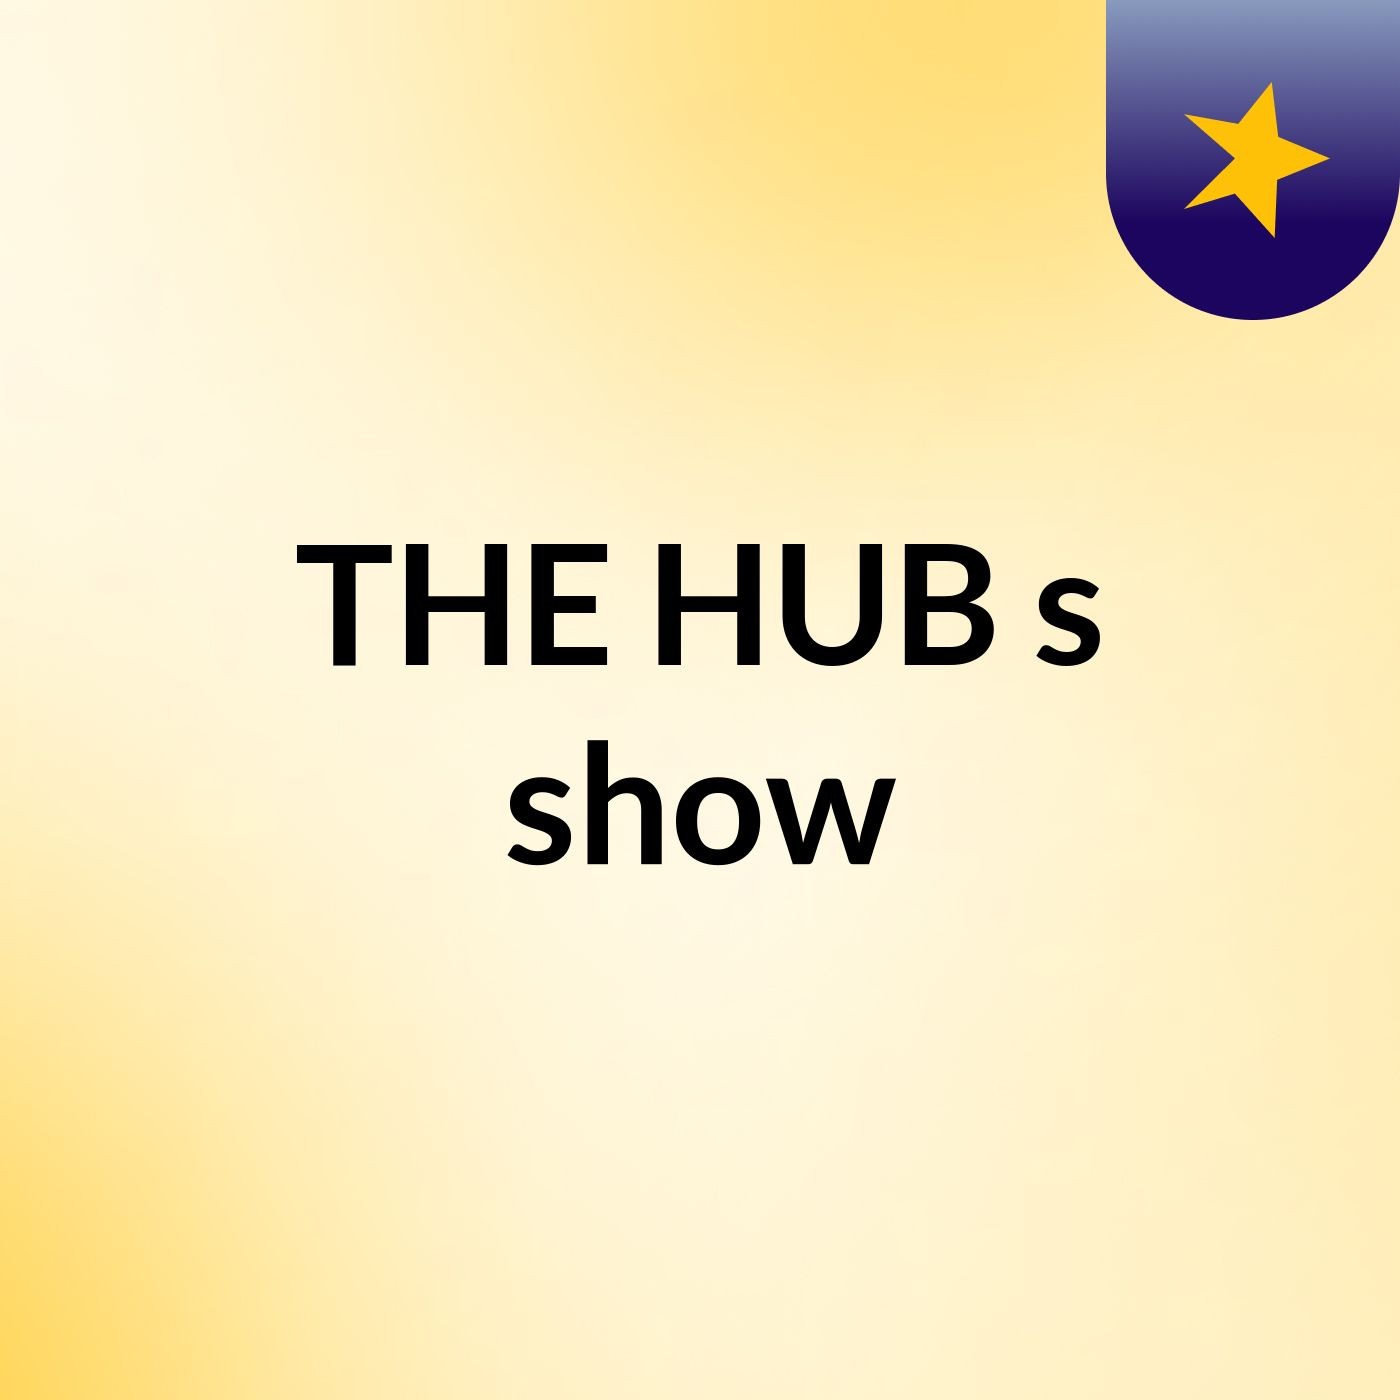 THE HUB's show